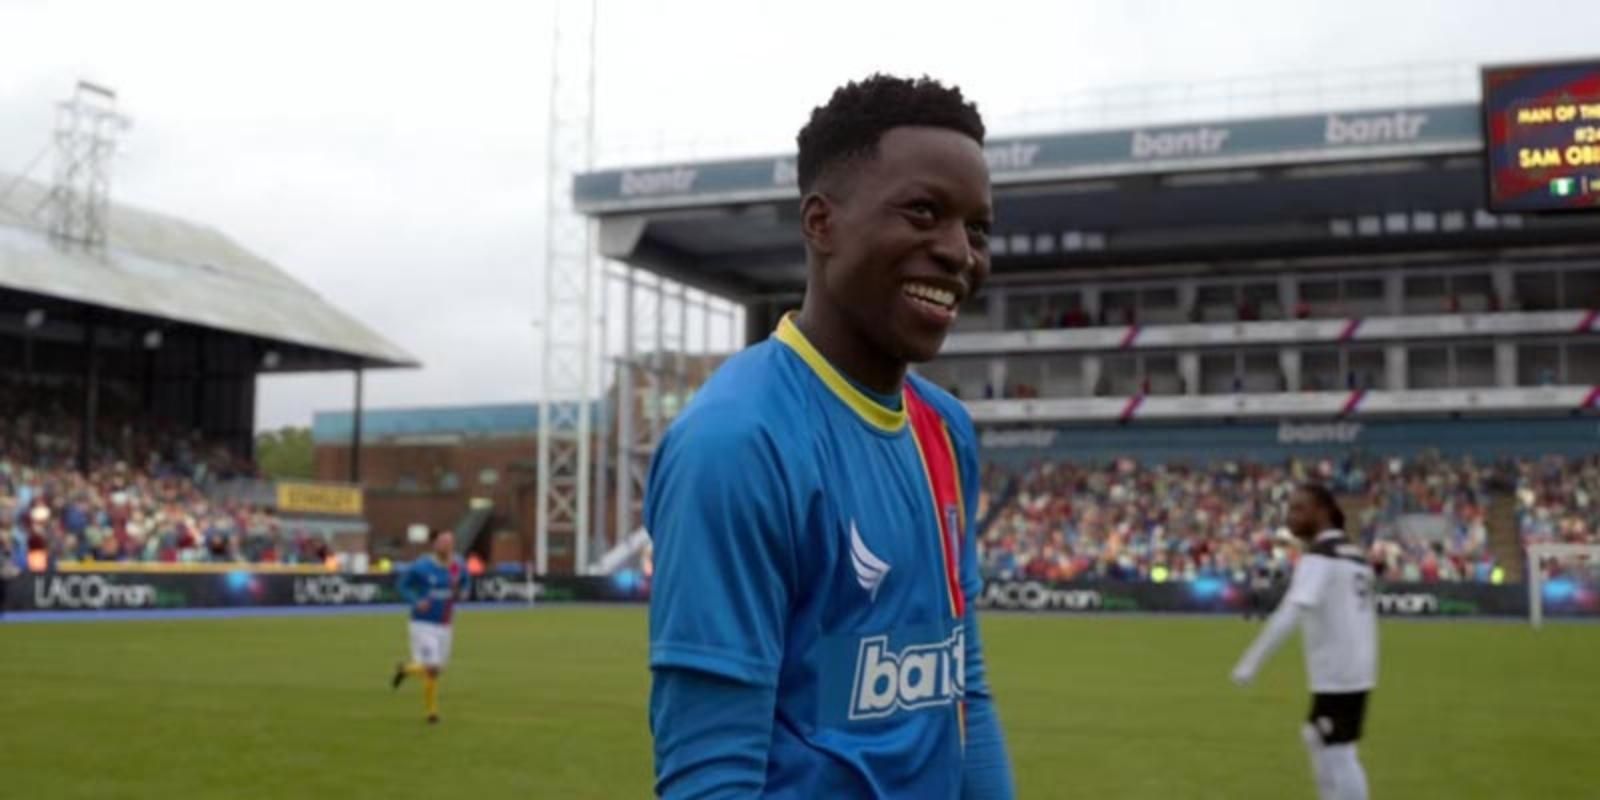 Sam Obisanya smiles in his uniform on the field in Ted Lasso